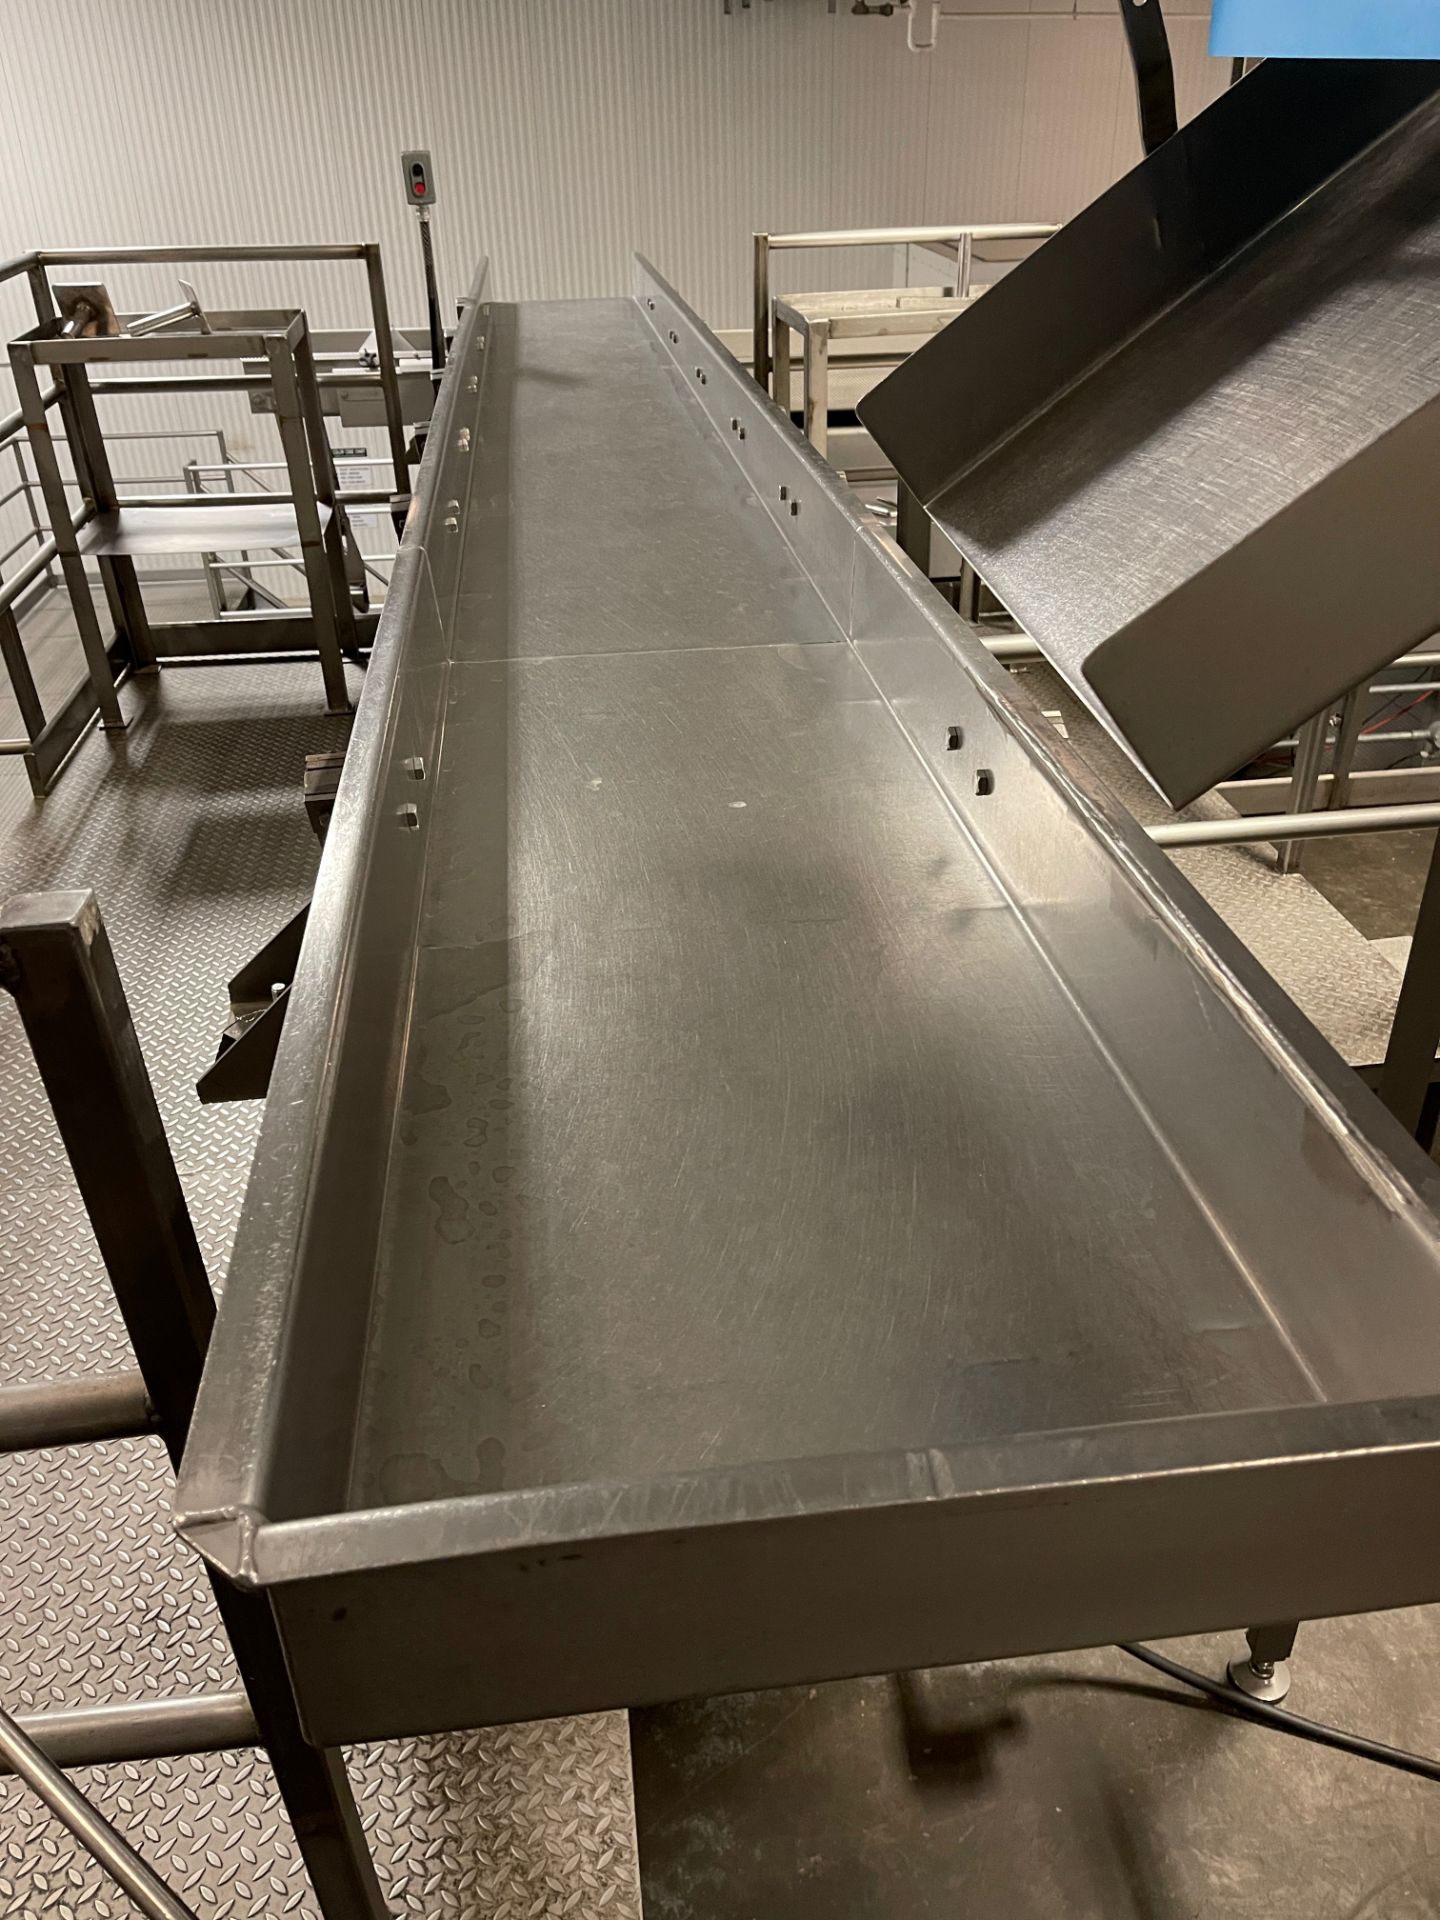 Key Isoflow Vibratory Conveyor, Approx. 18" x 12', Model 435055-1, S/N 06-155951 | Rig Fee $350 - Image 3 of 5